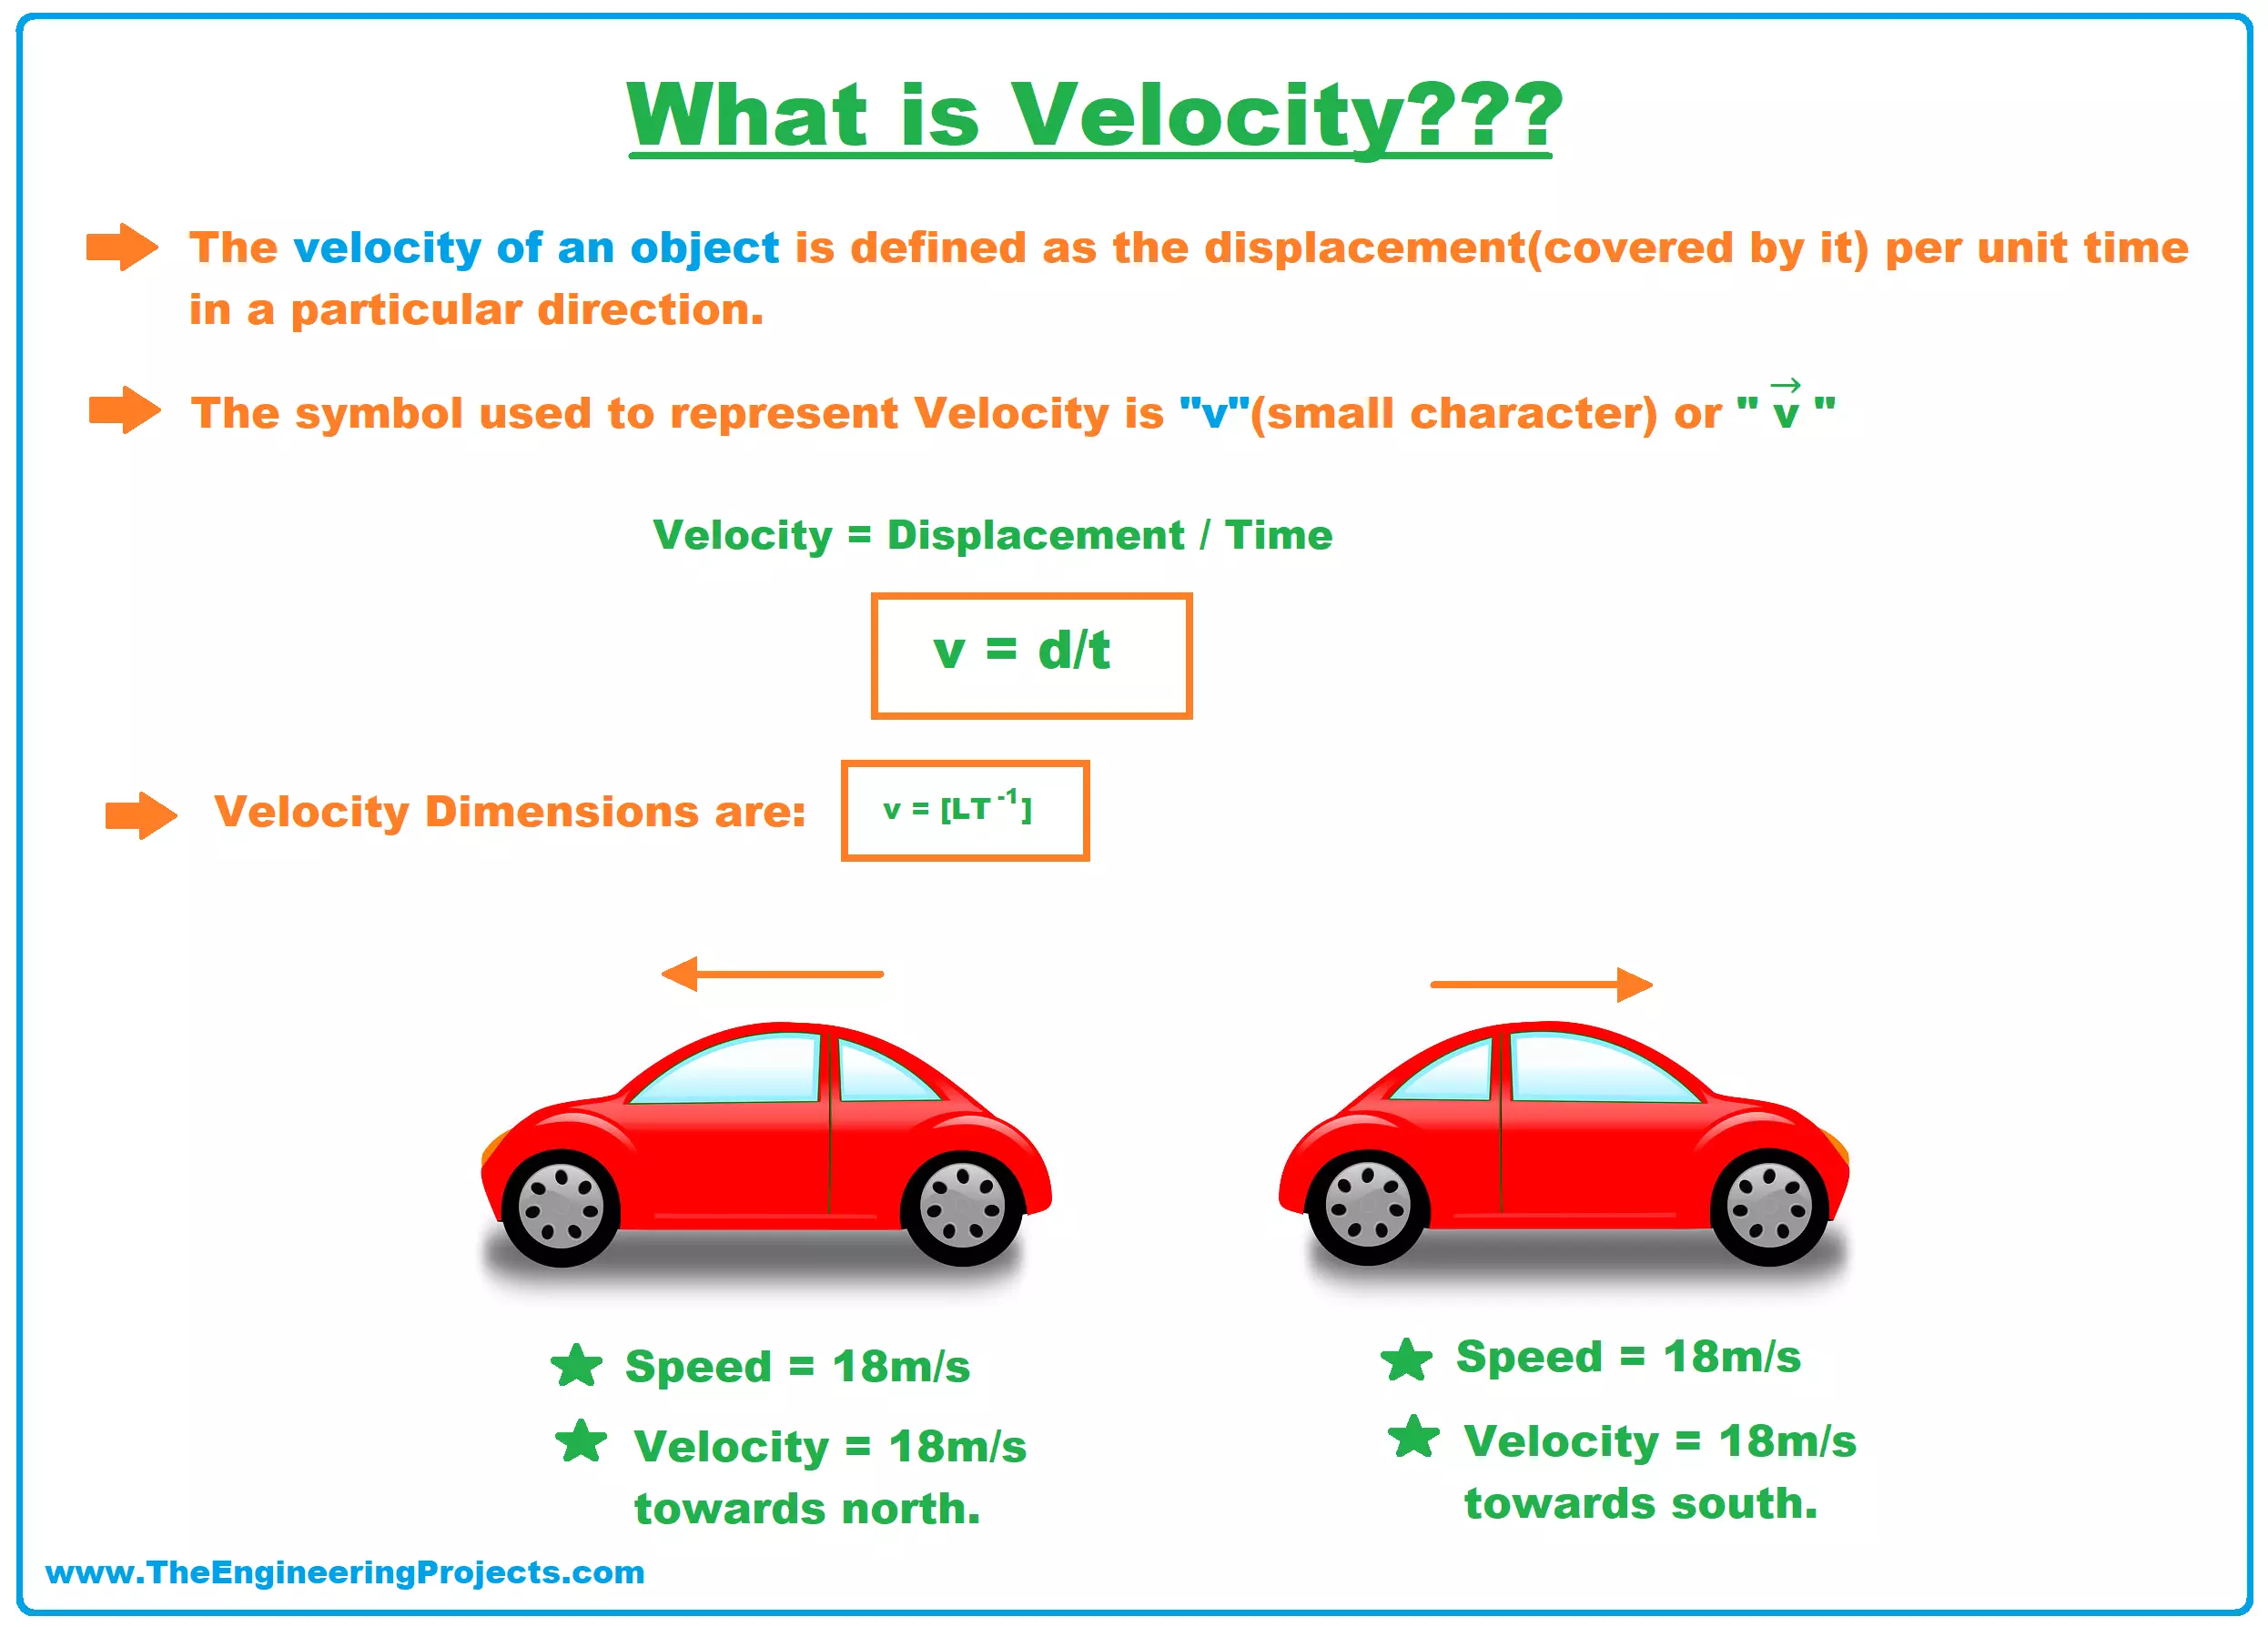 https://images.theengineeringprojects.com/image/webp/2021/05/what-is-velocity.png.webp?ssl=1